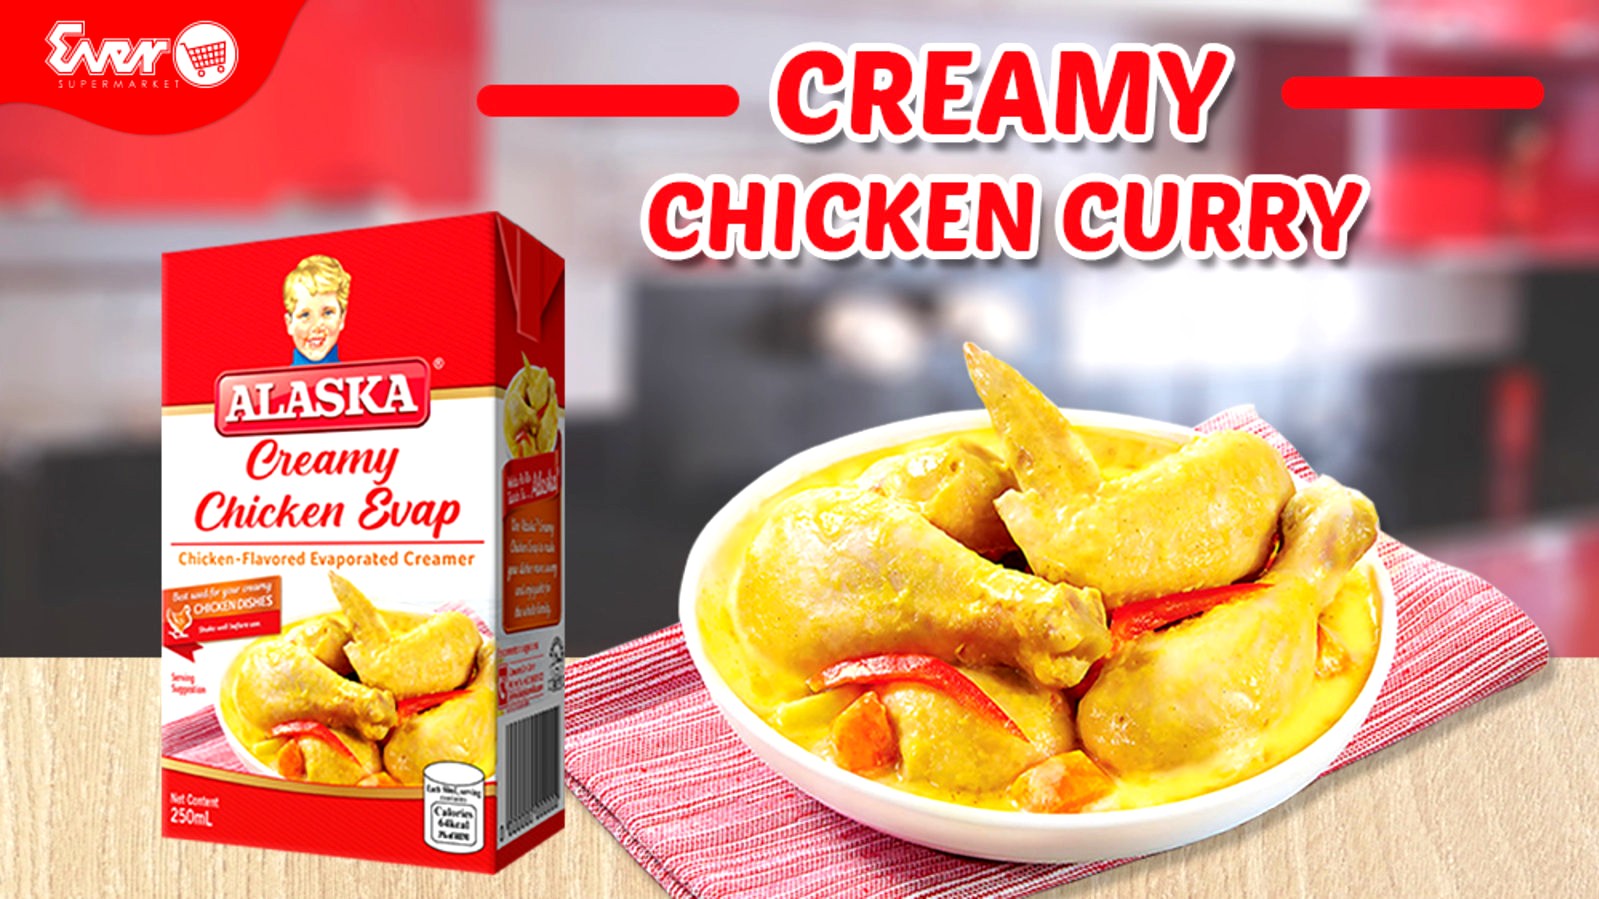 Image of Alaska: Creamy Chicken Curry